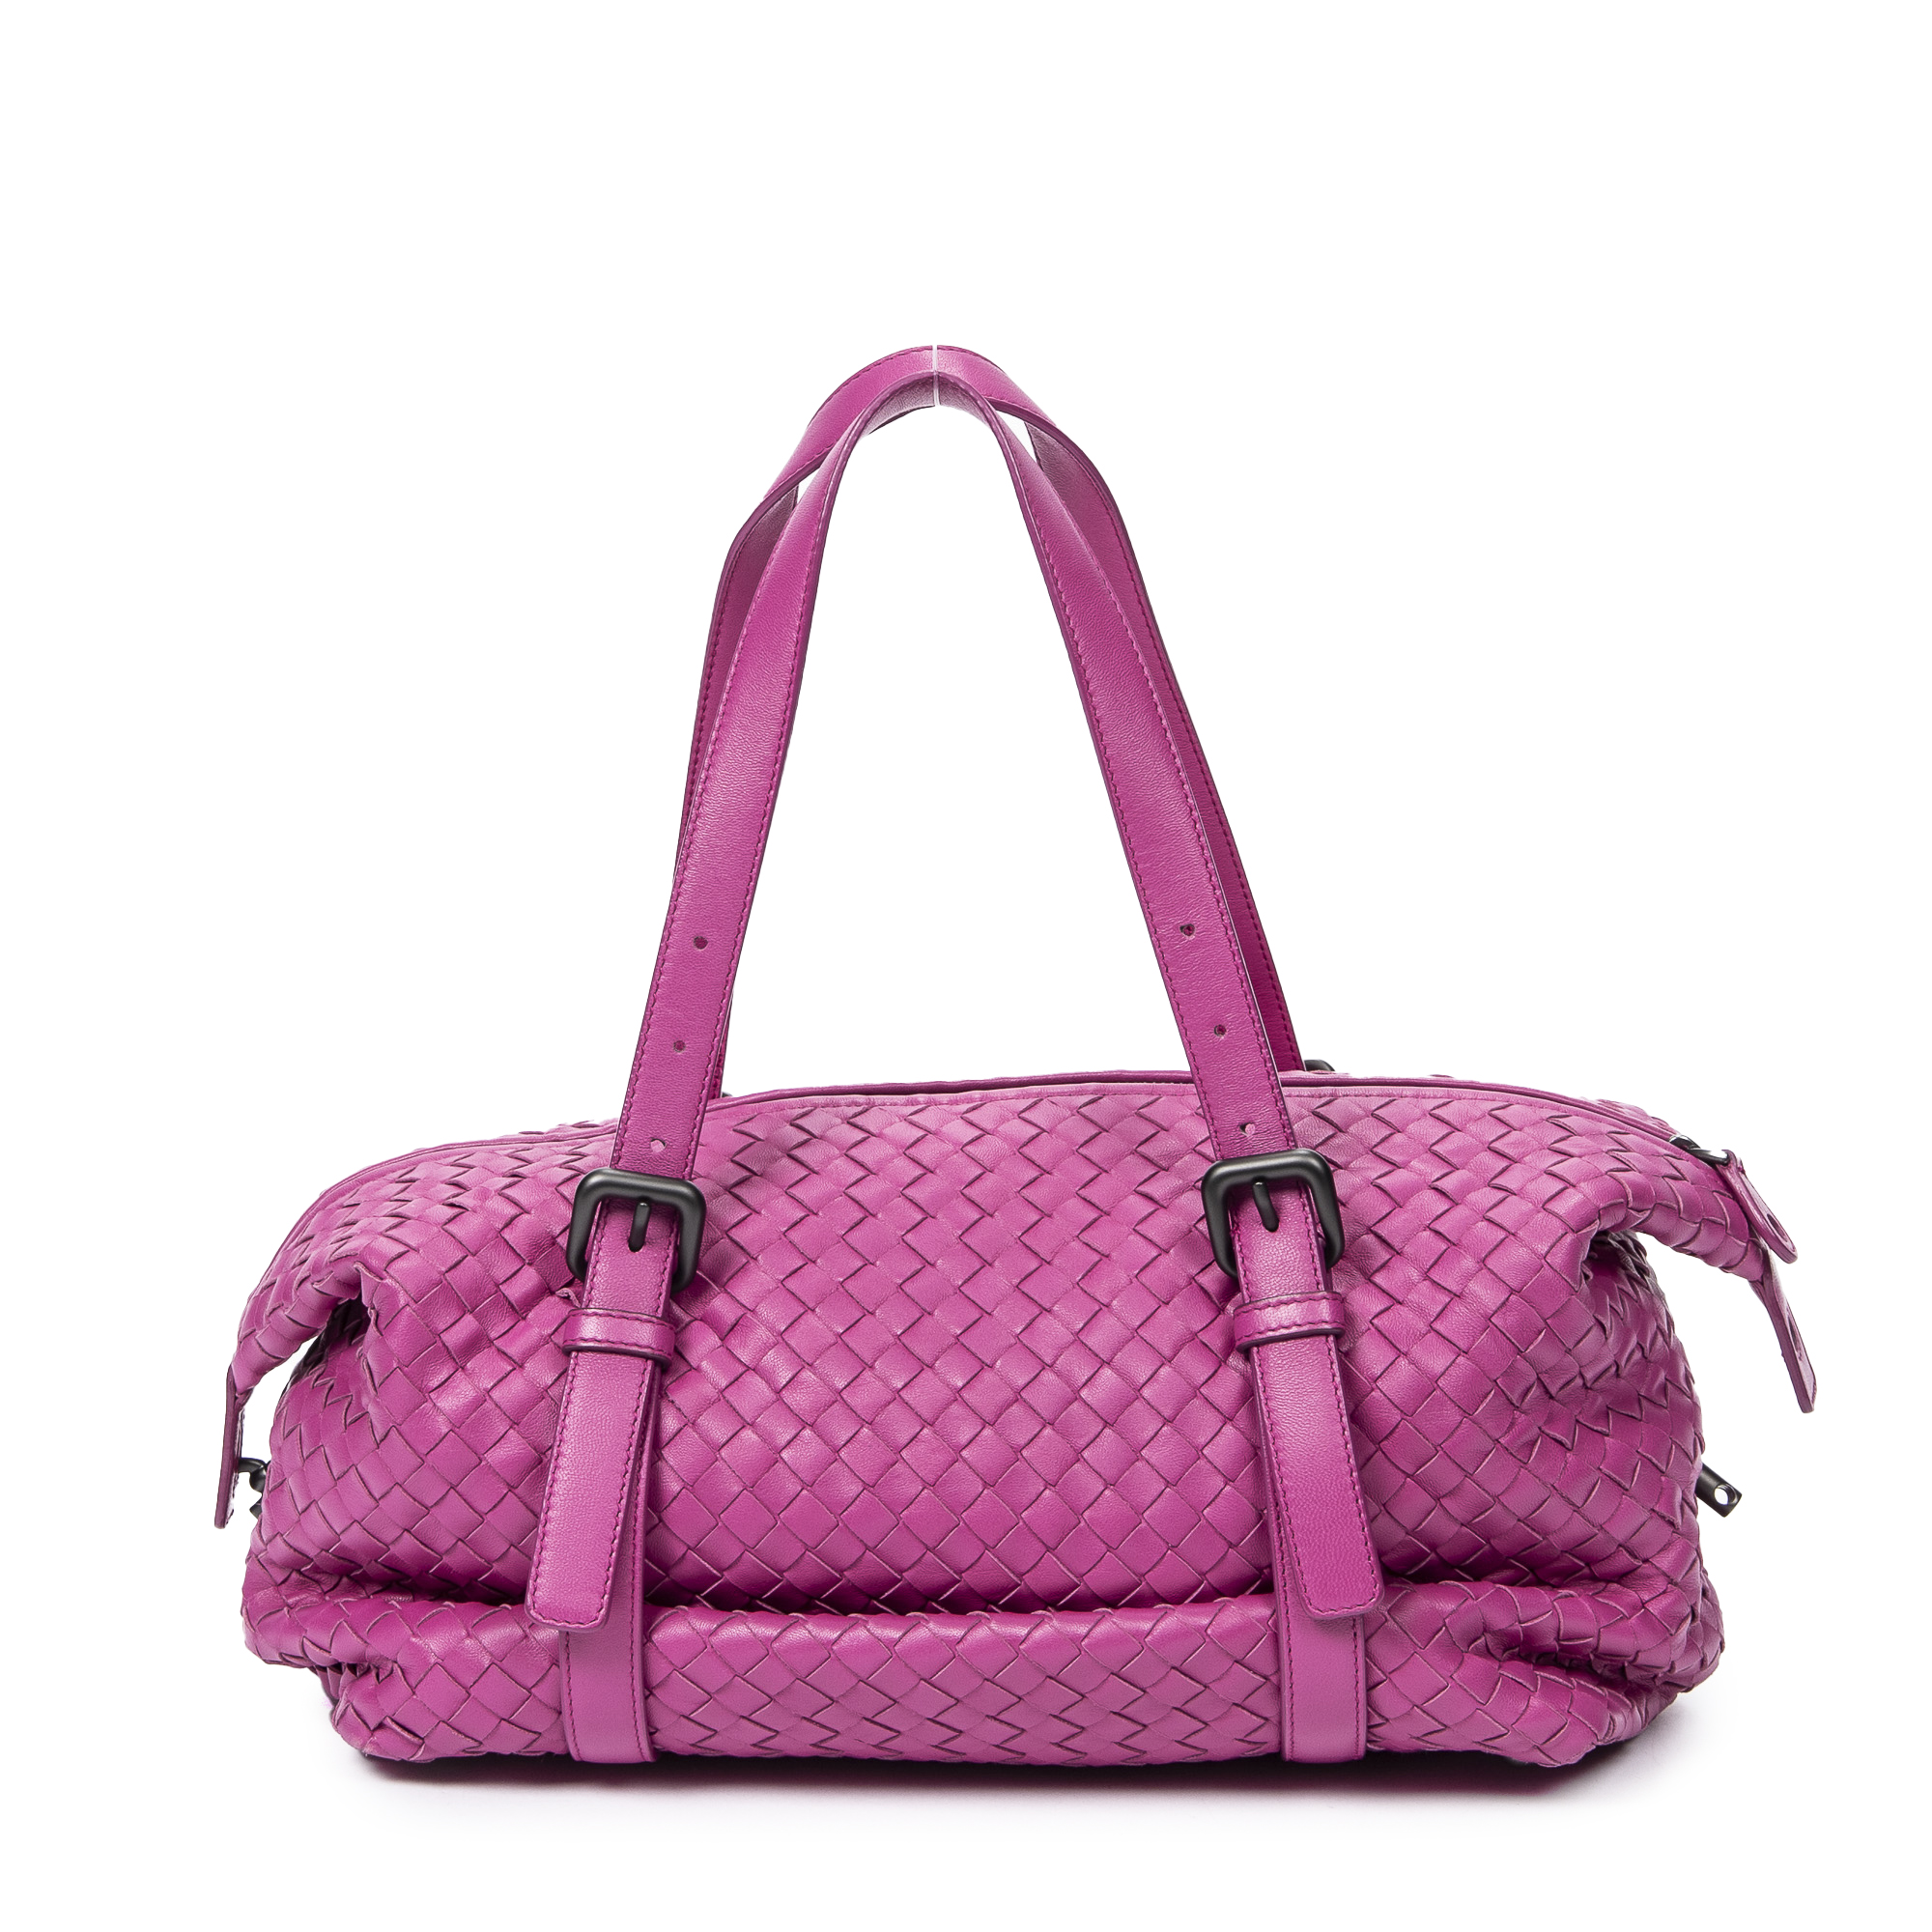 Bottega Veneta Authenticated Leather Handbag